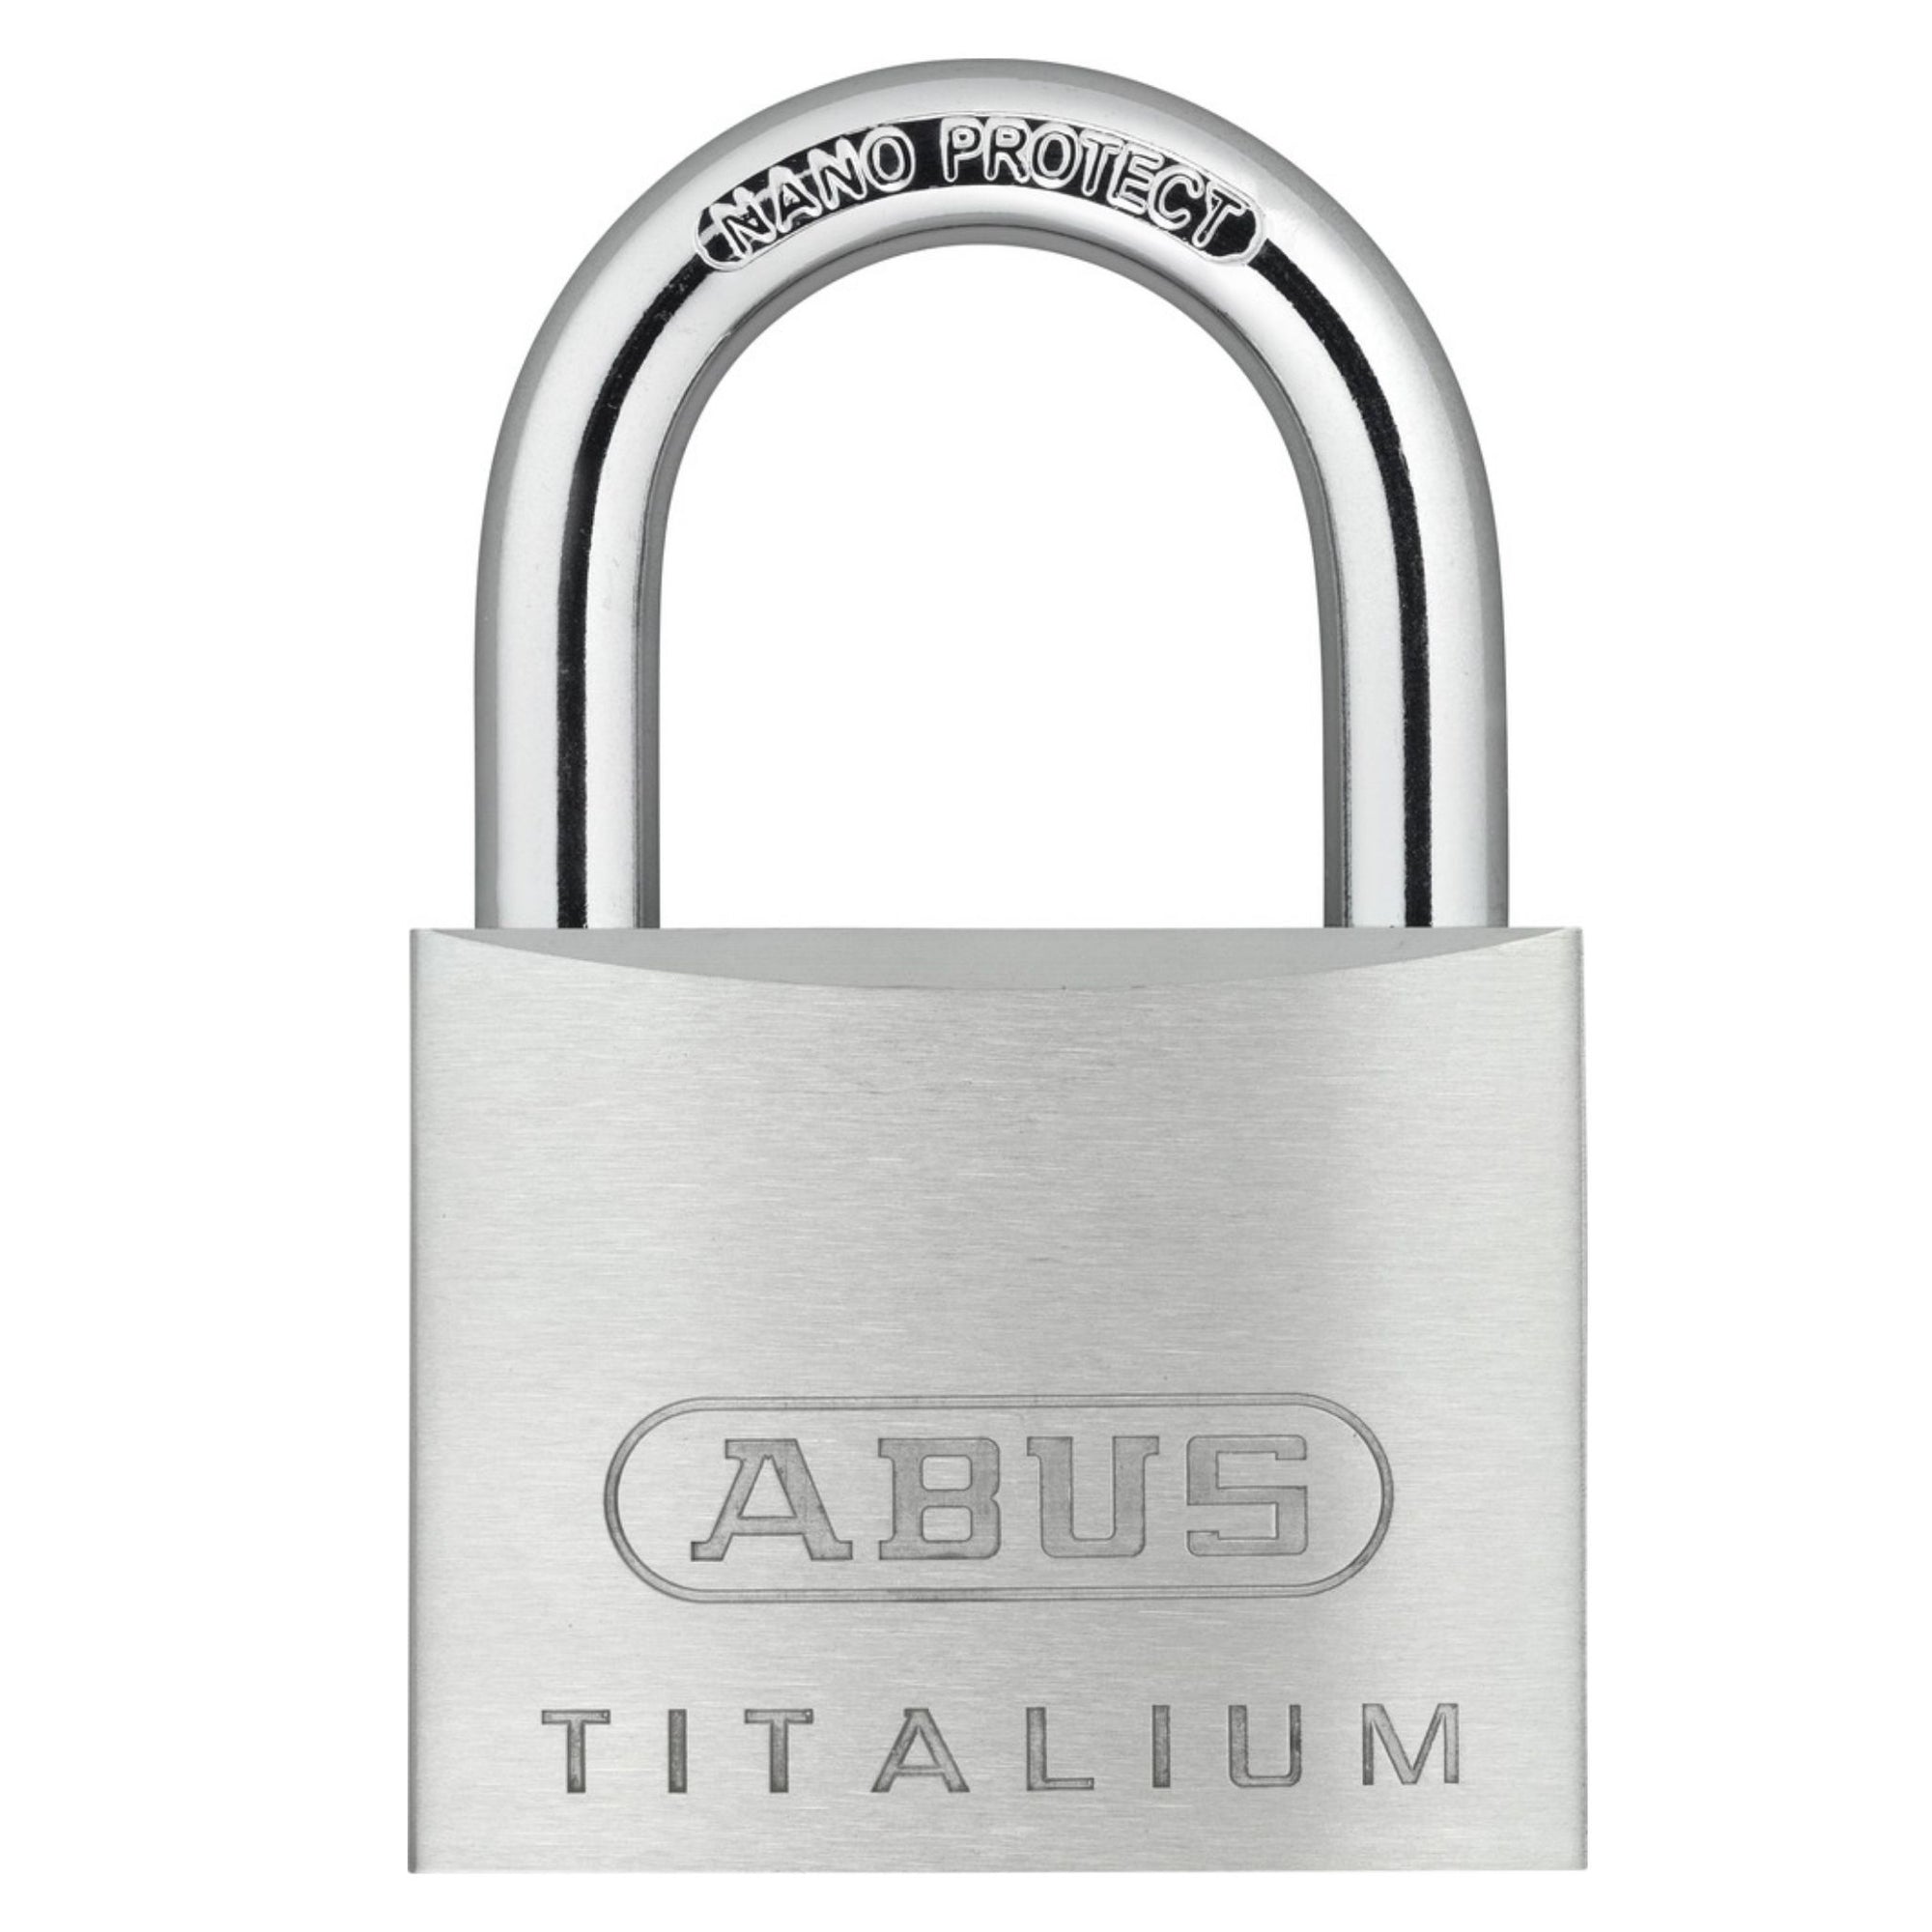 Abus 64TI/50 KA 6512 Titalium Lock Keyed Alike to Match Existing Key Number KA6512 - The Lock Source